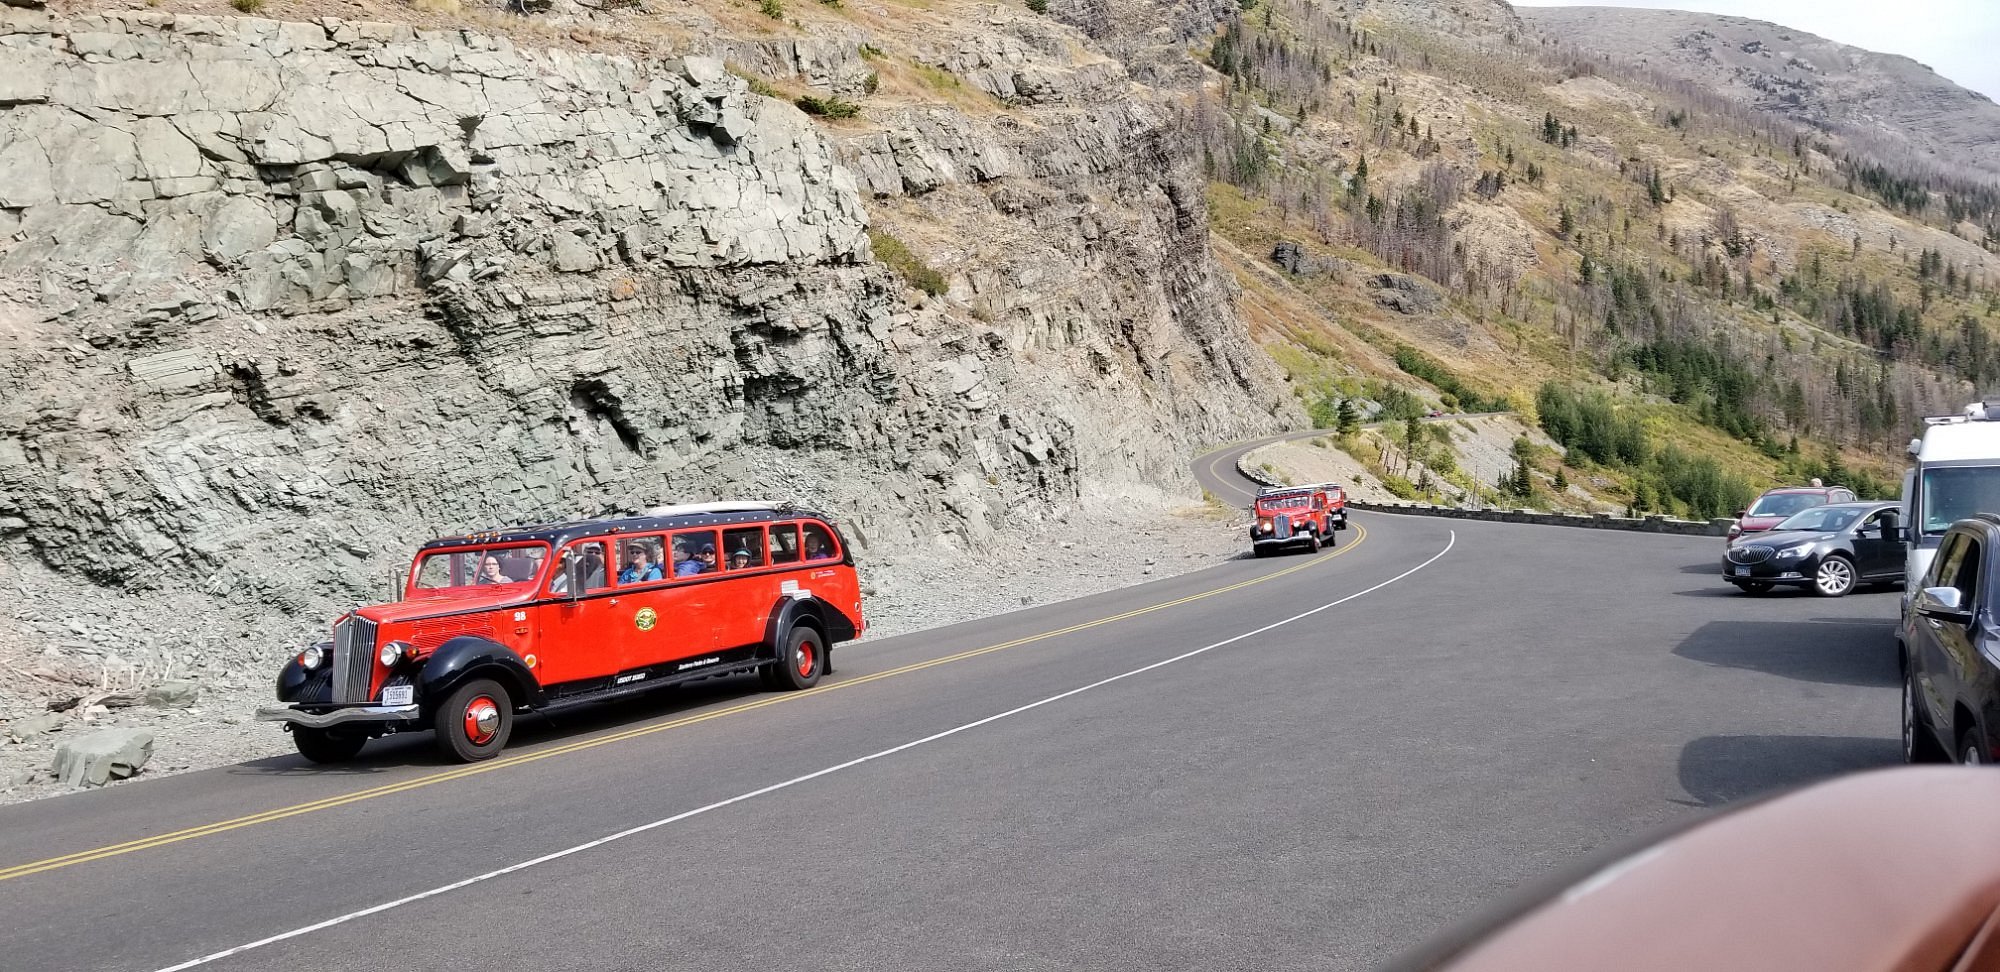 red bus tours for glacier national park